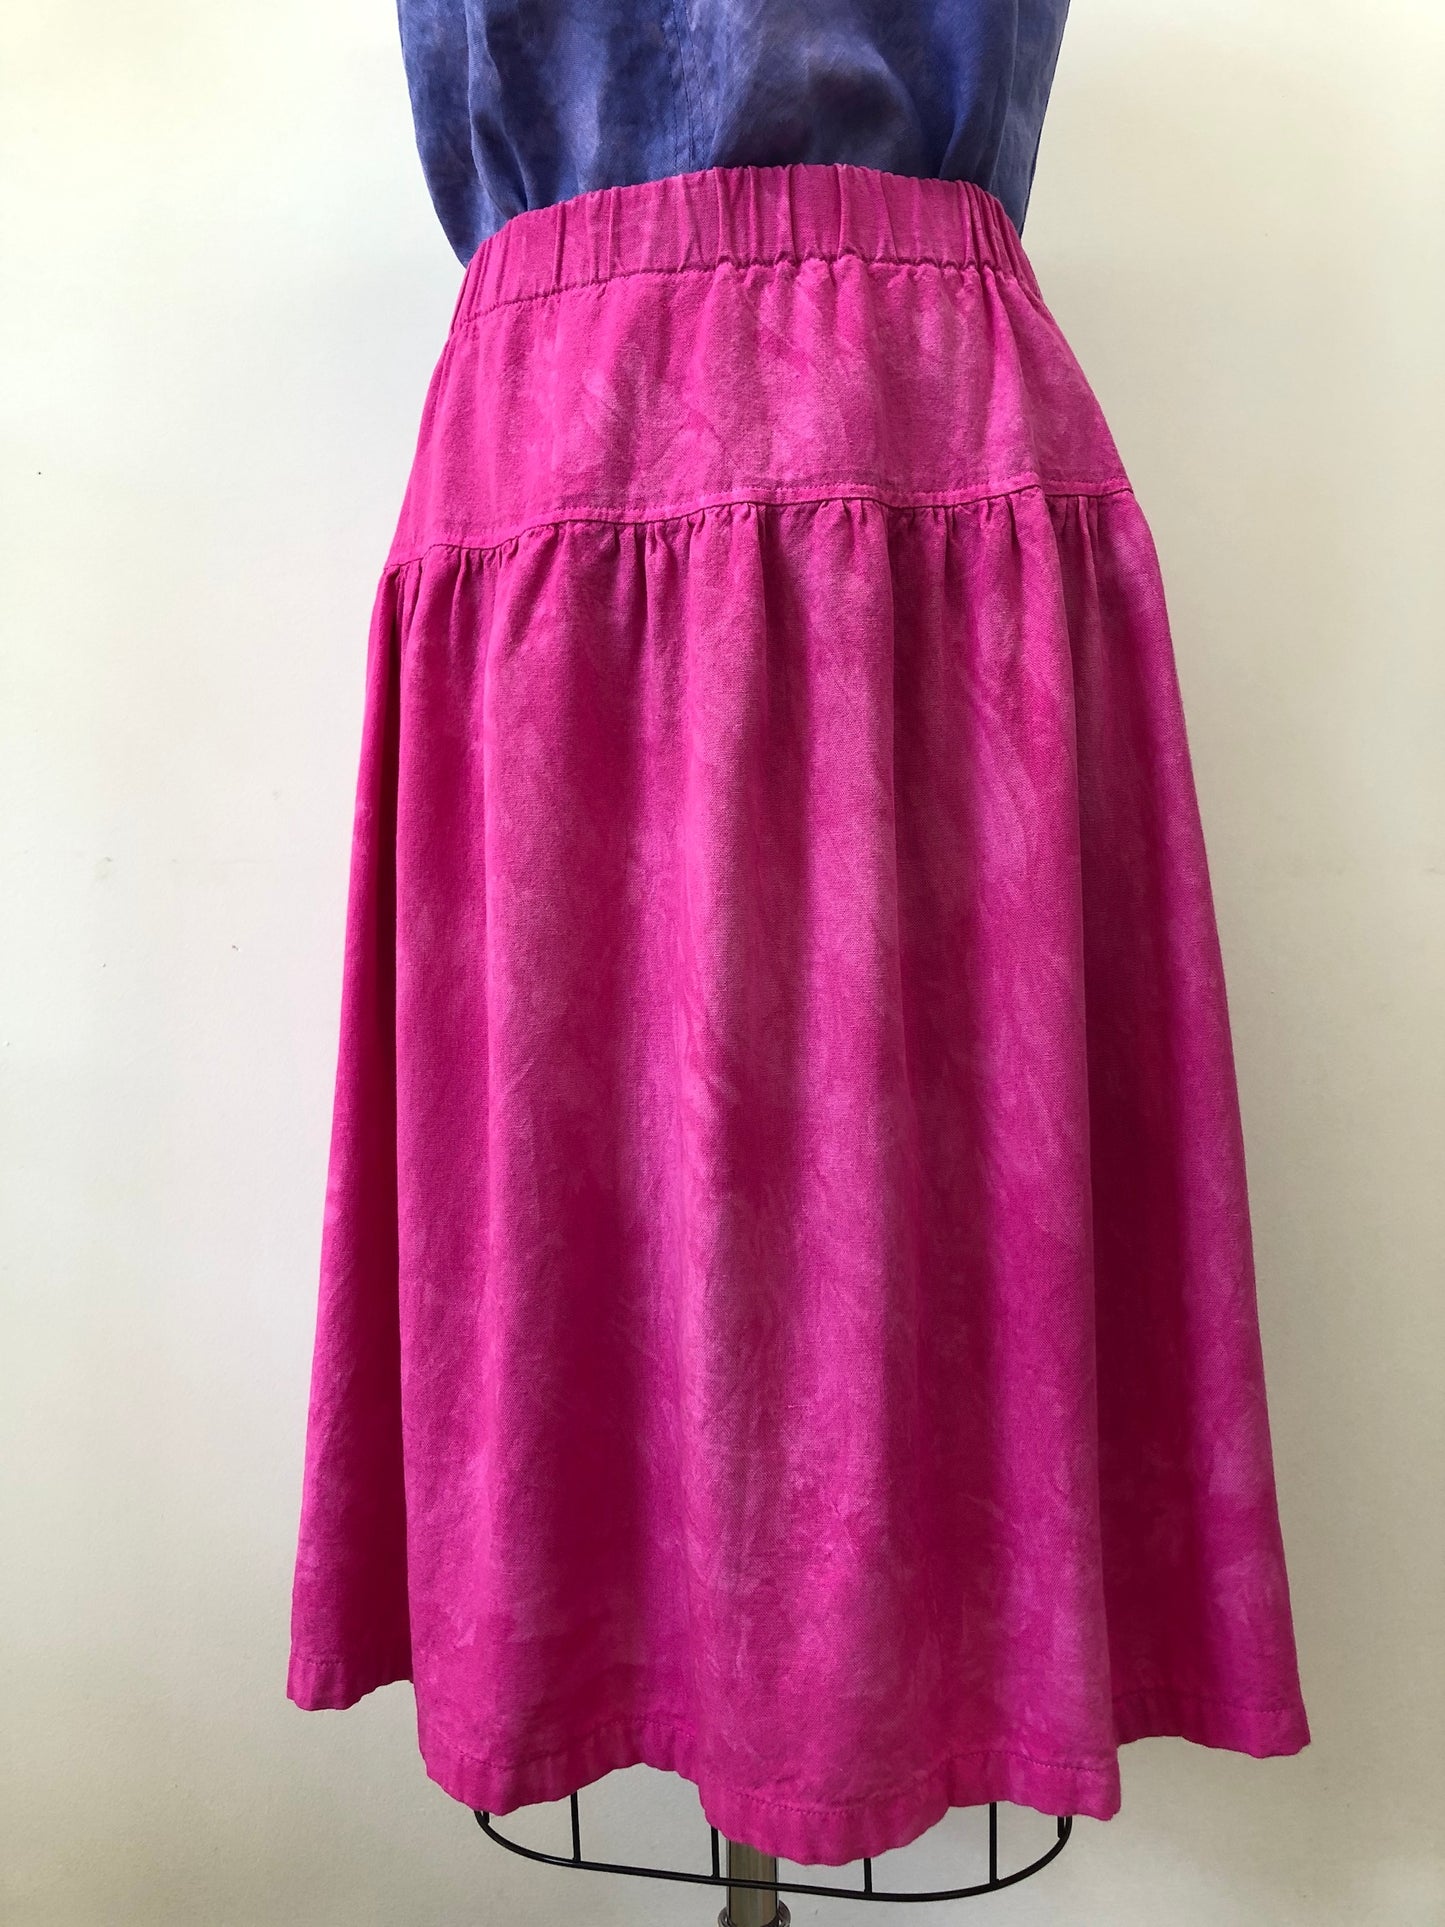 Petticoat Skirt - Choose Your Color